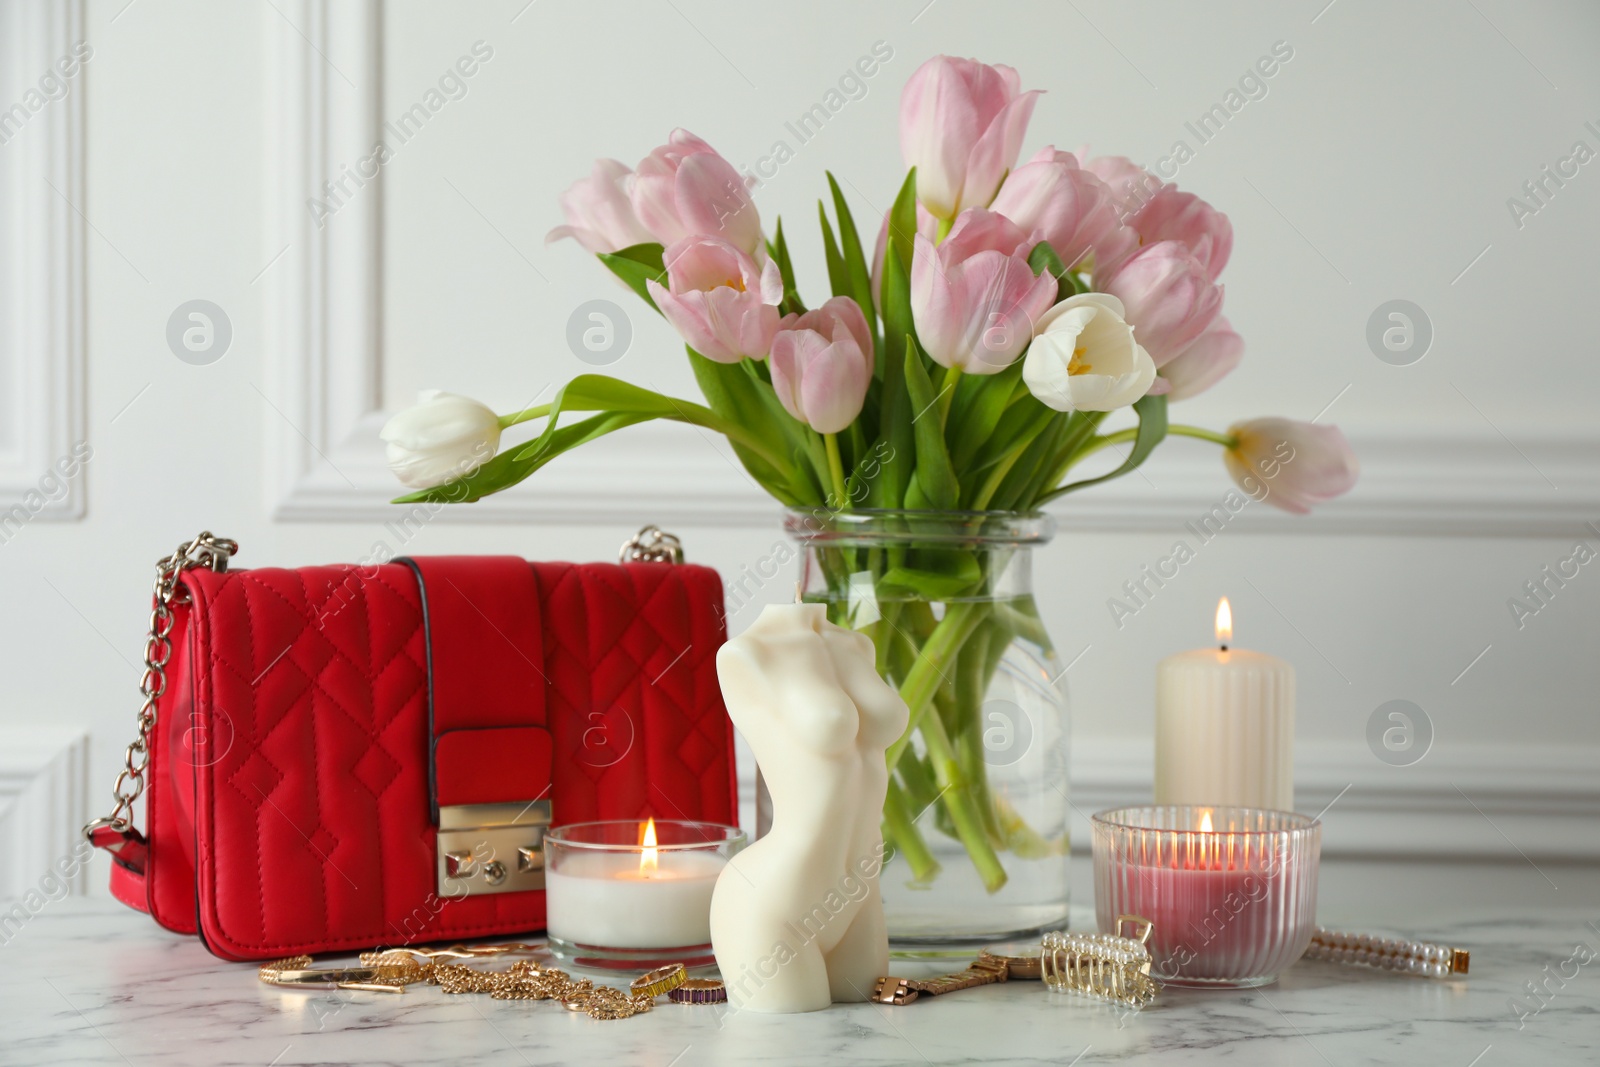 Photo of Beautiful female body shaped candle and tulips on white marble table. Stylish decor